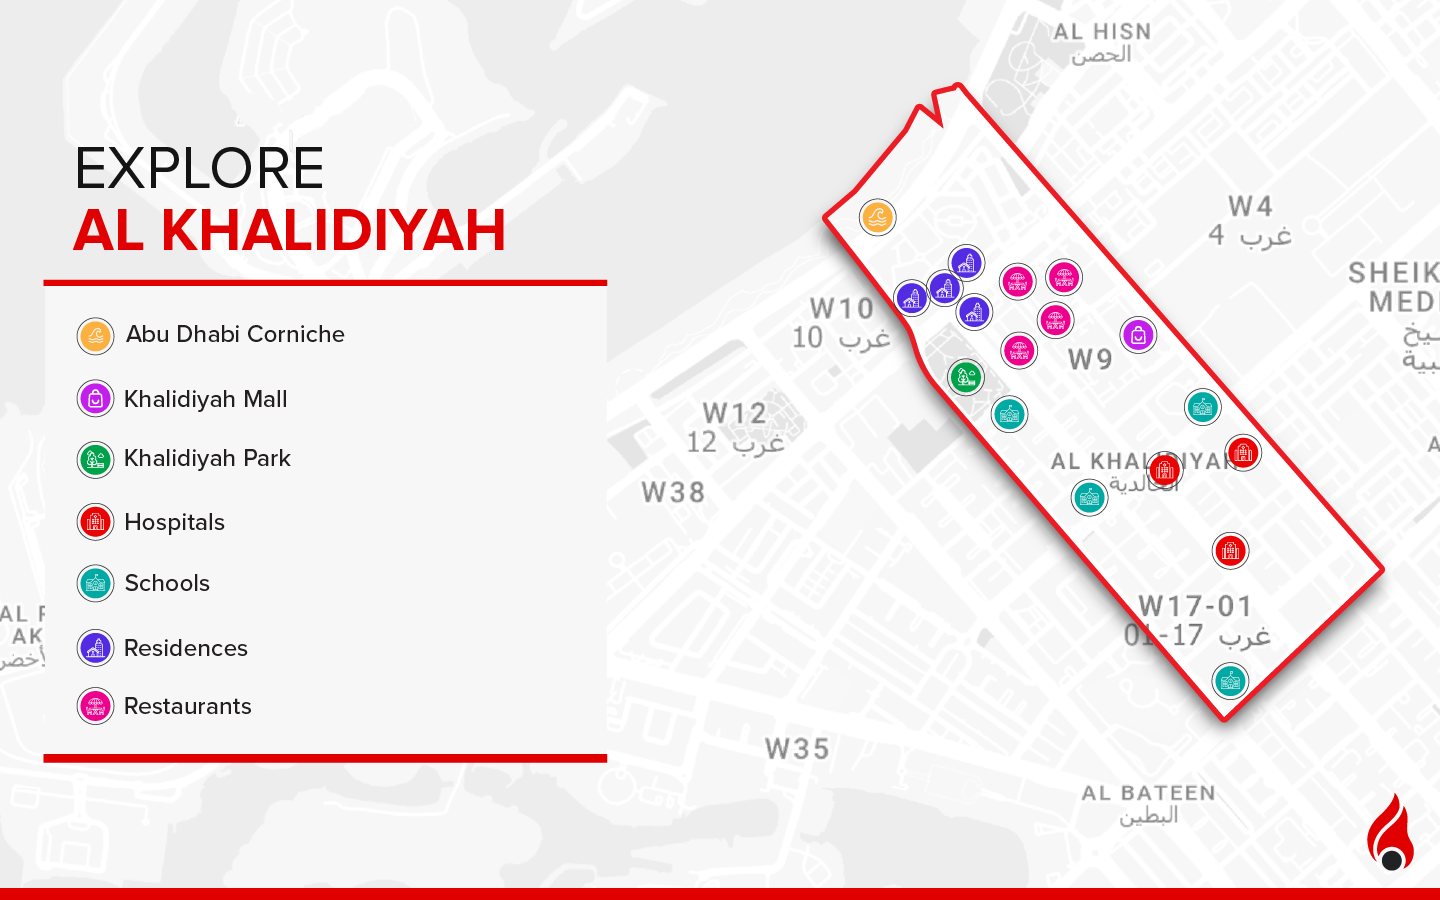 Al Khalidiyah map in Abu Dhabi and bird's eye view of landmarks